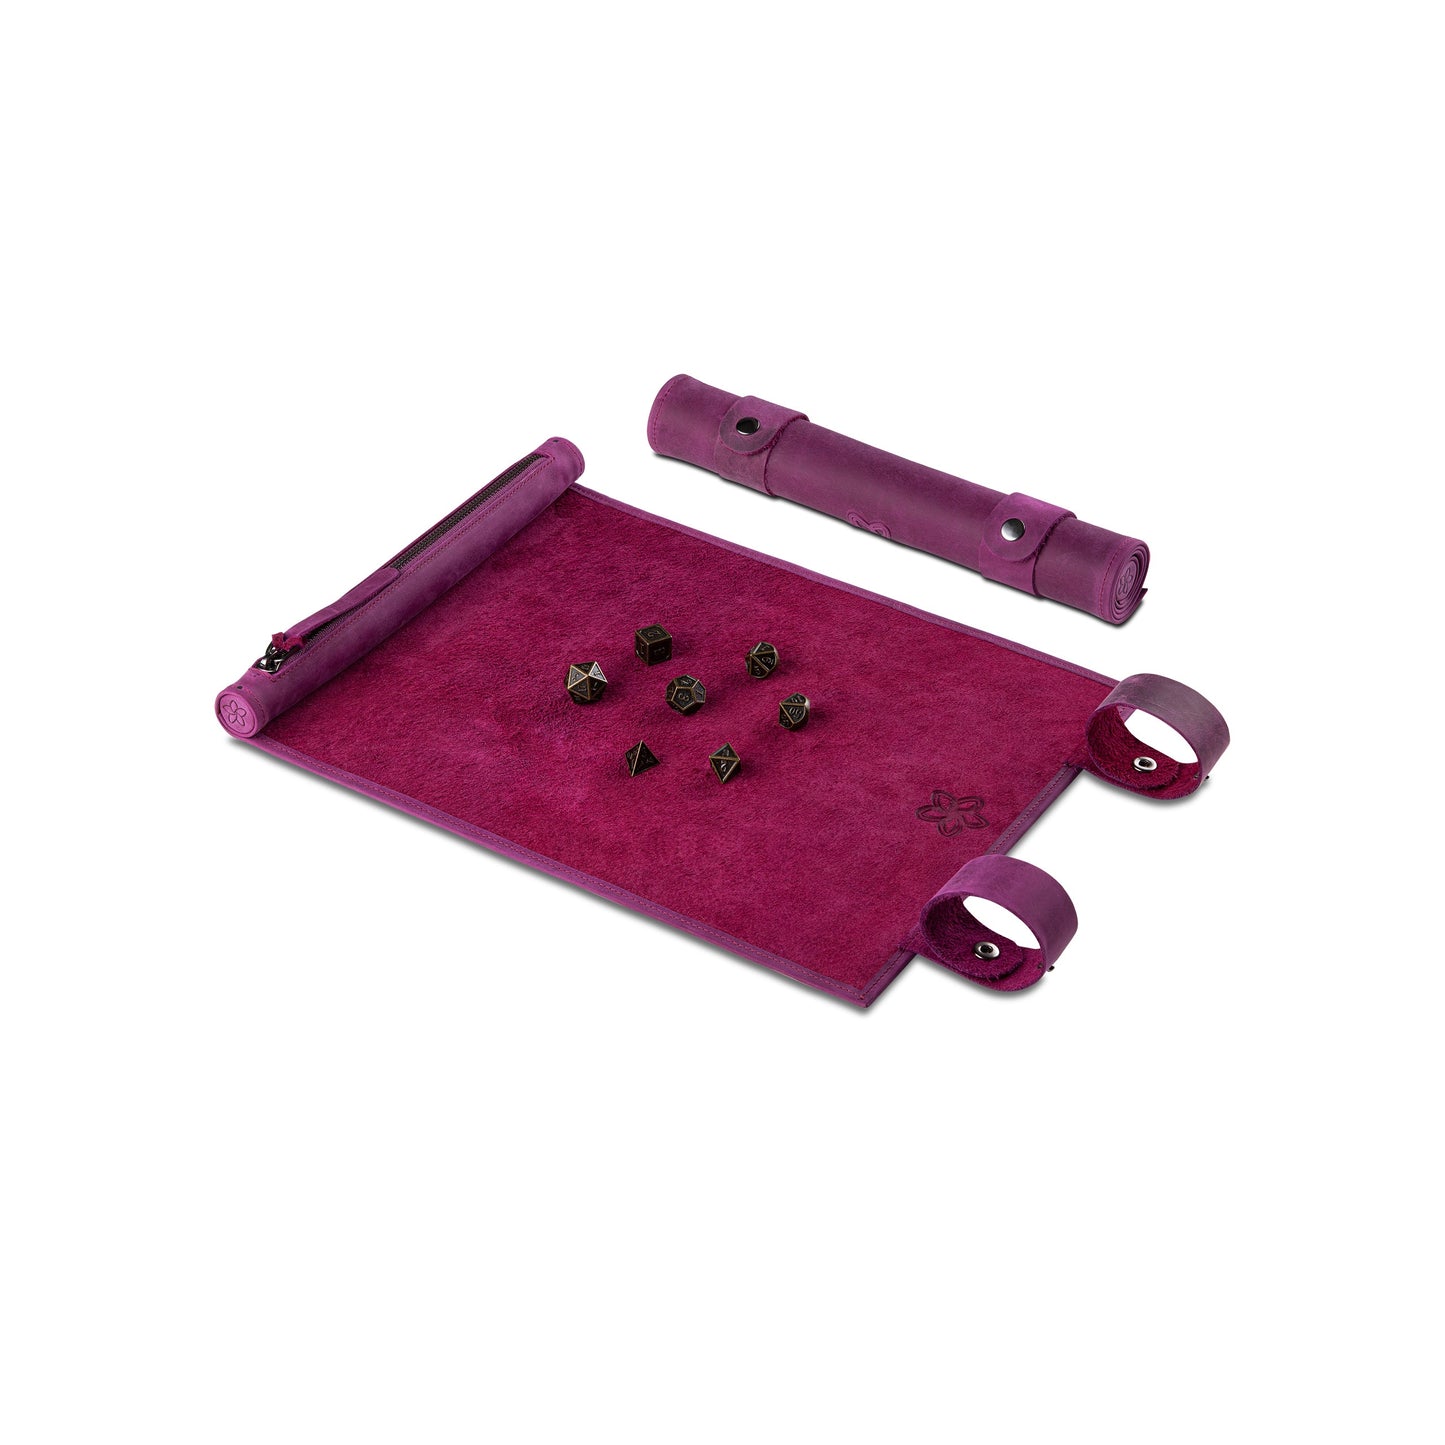 Roll Up RPG Dice Mat including Bronze metal set - Purple